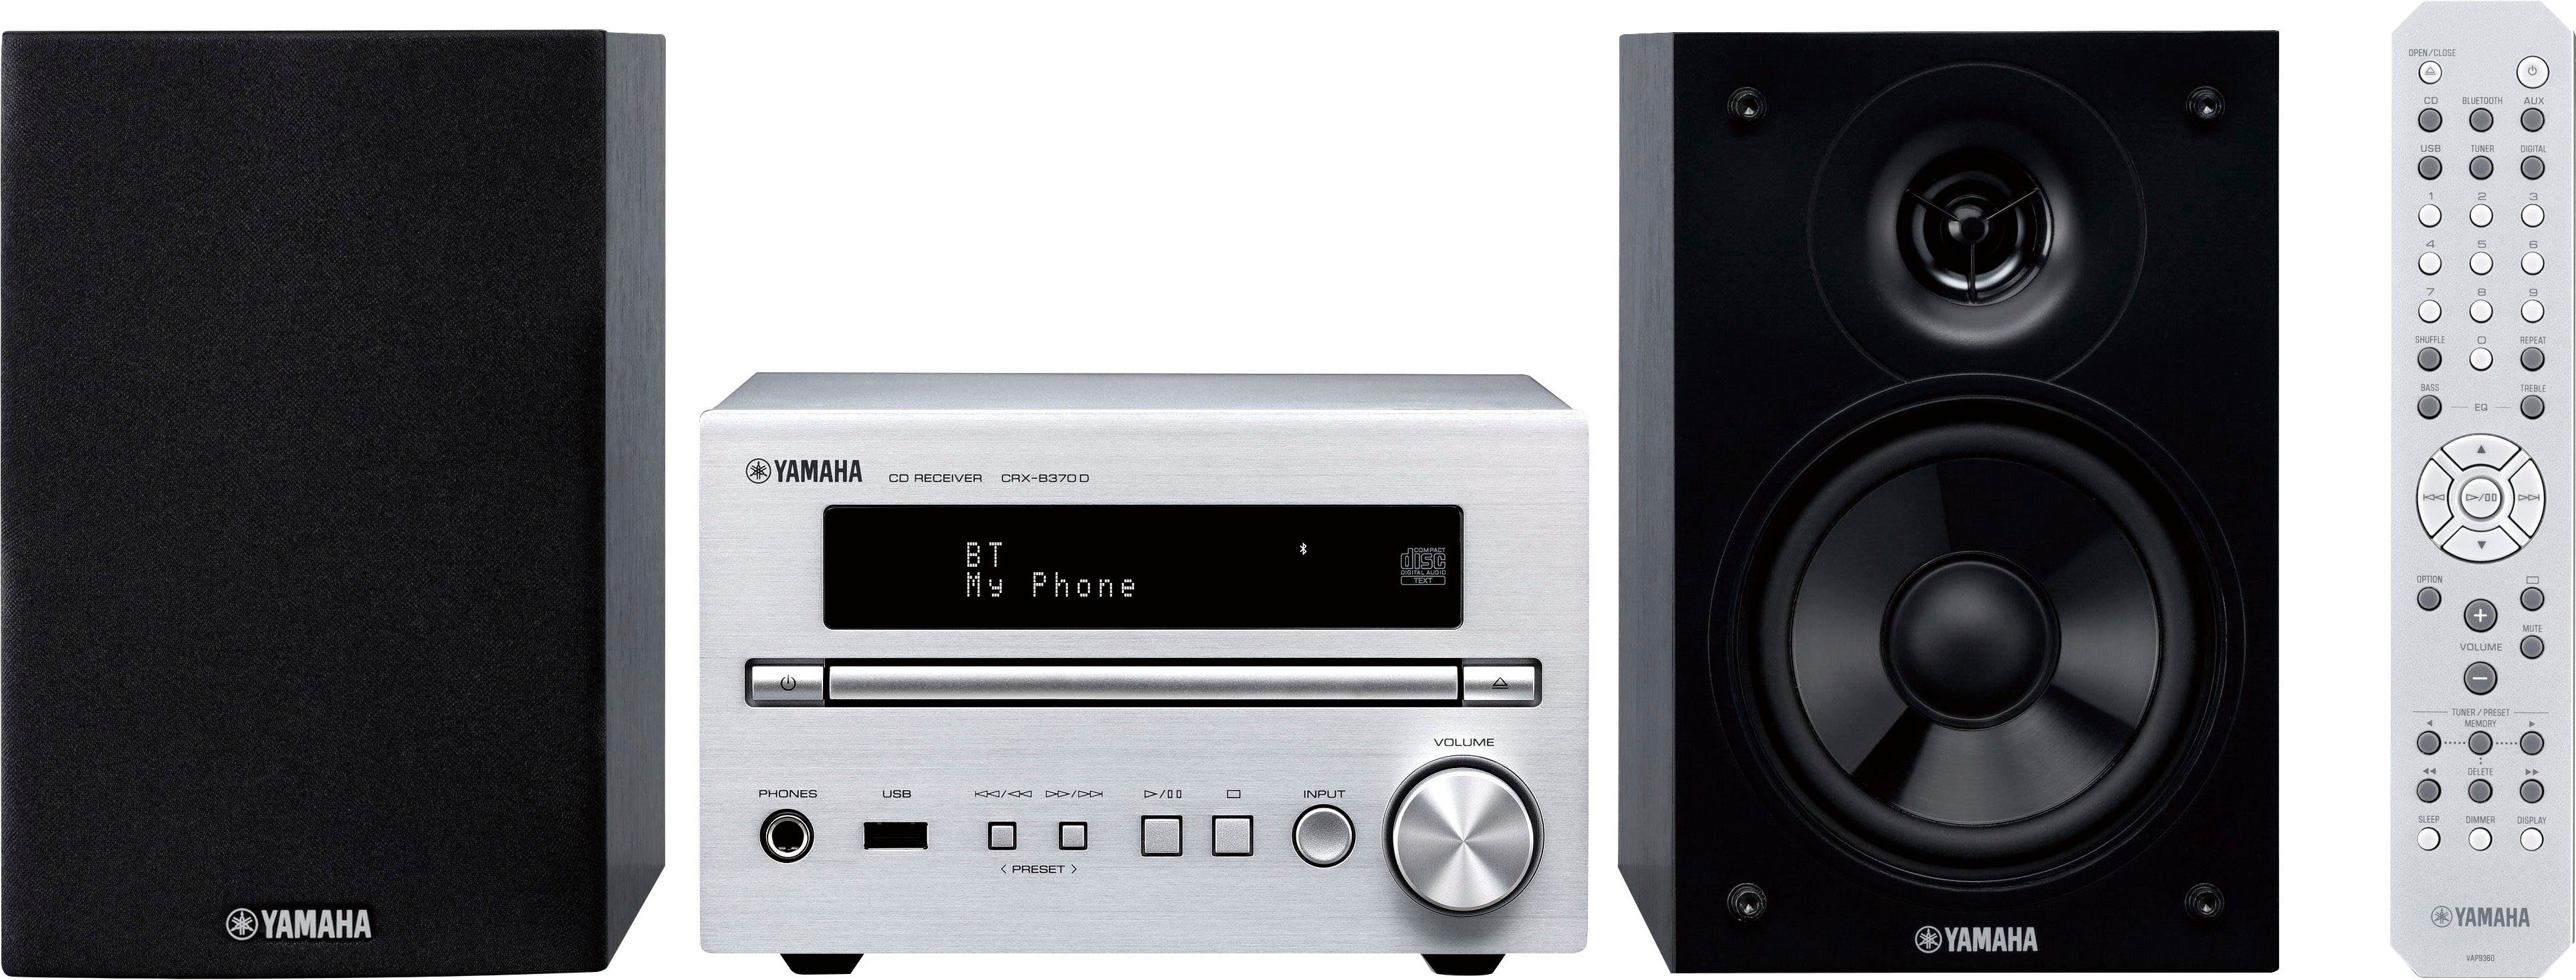 Yamaha MCR-B270D Digitalradio (DAB) (Digitalradio Silber/Schwarz (DAB), 40 W) FM-Tuner